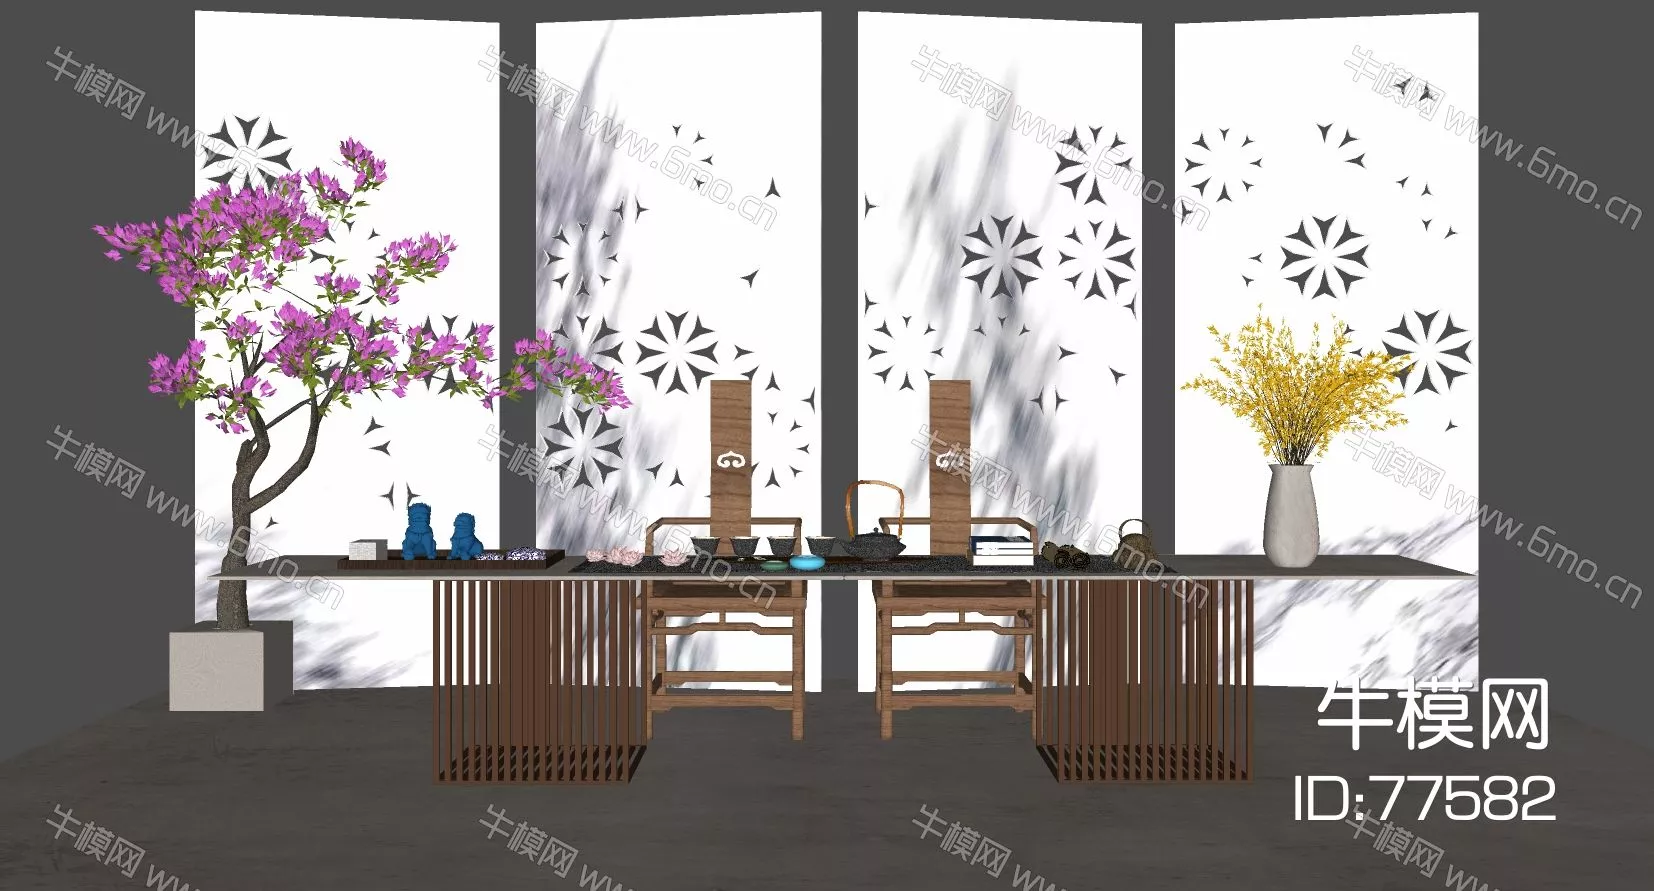 CHINESE TEA TABLE SET - SKETCHUP 3D MODEL - ENSCAPE - 77582